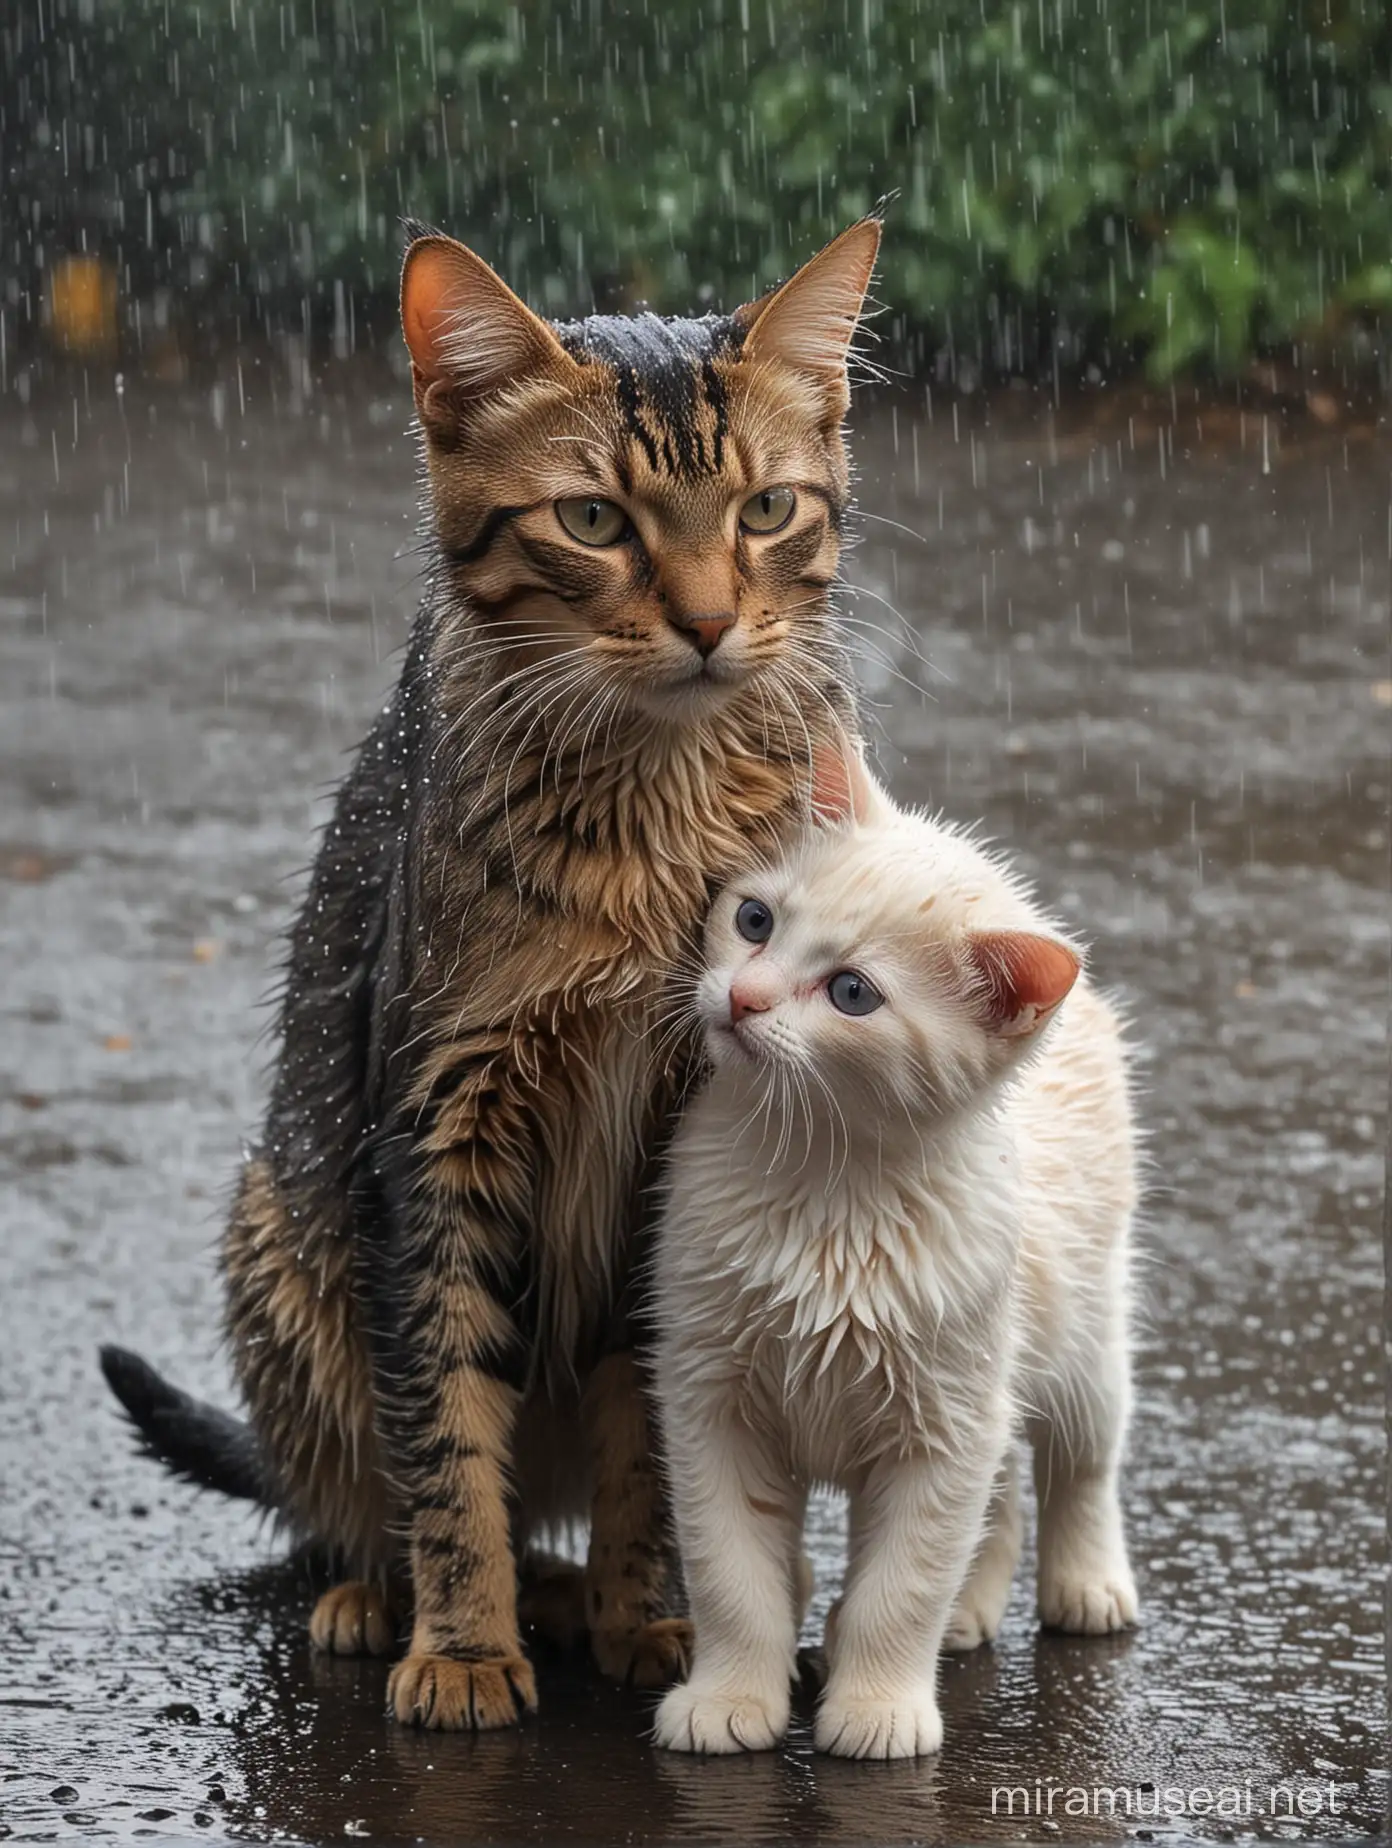 Cat and kitten wet in rain